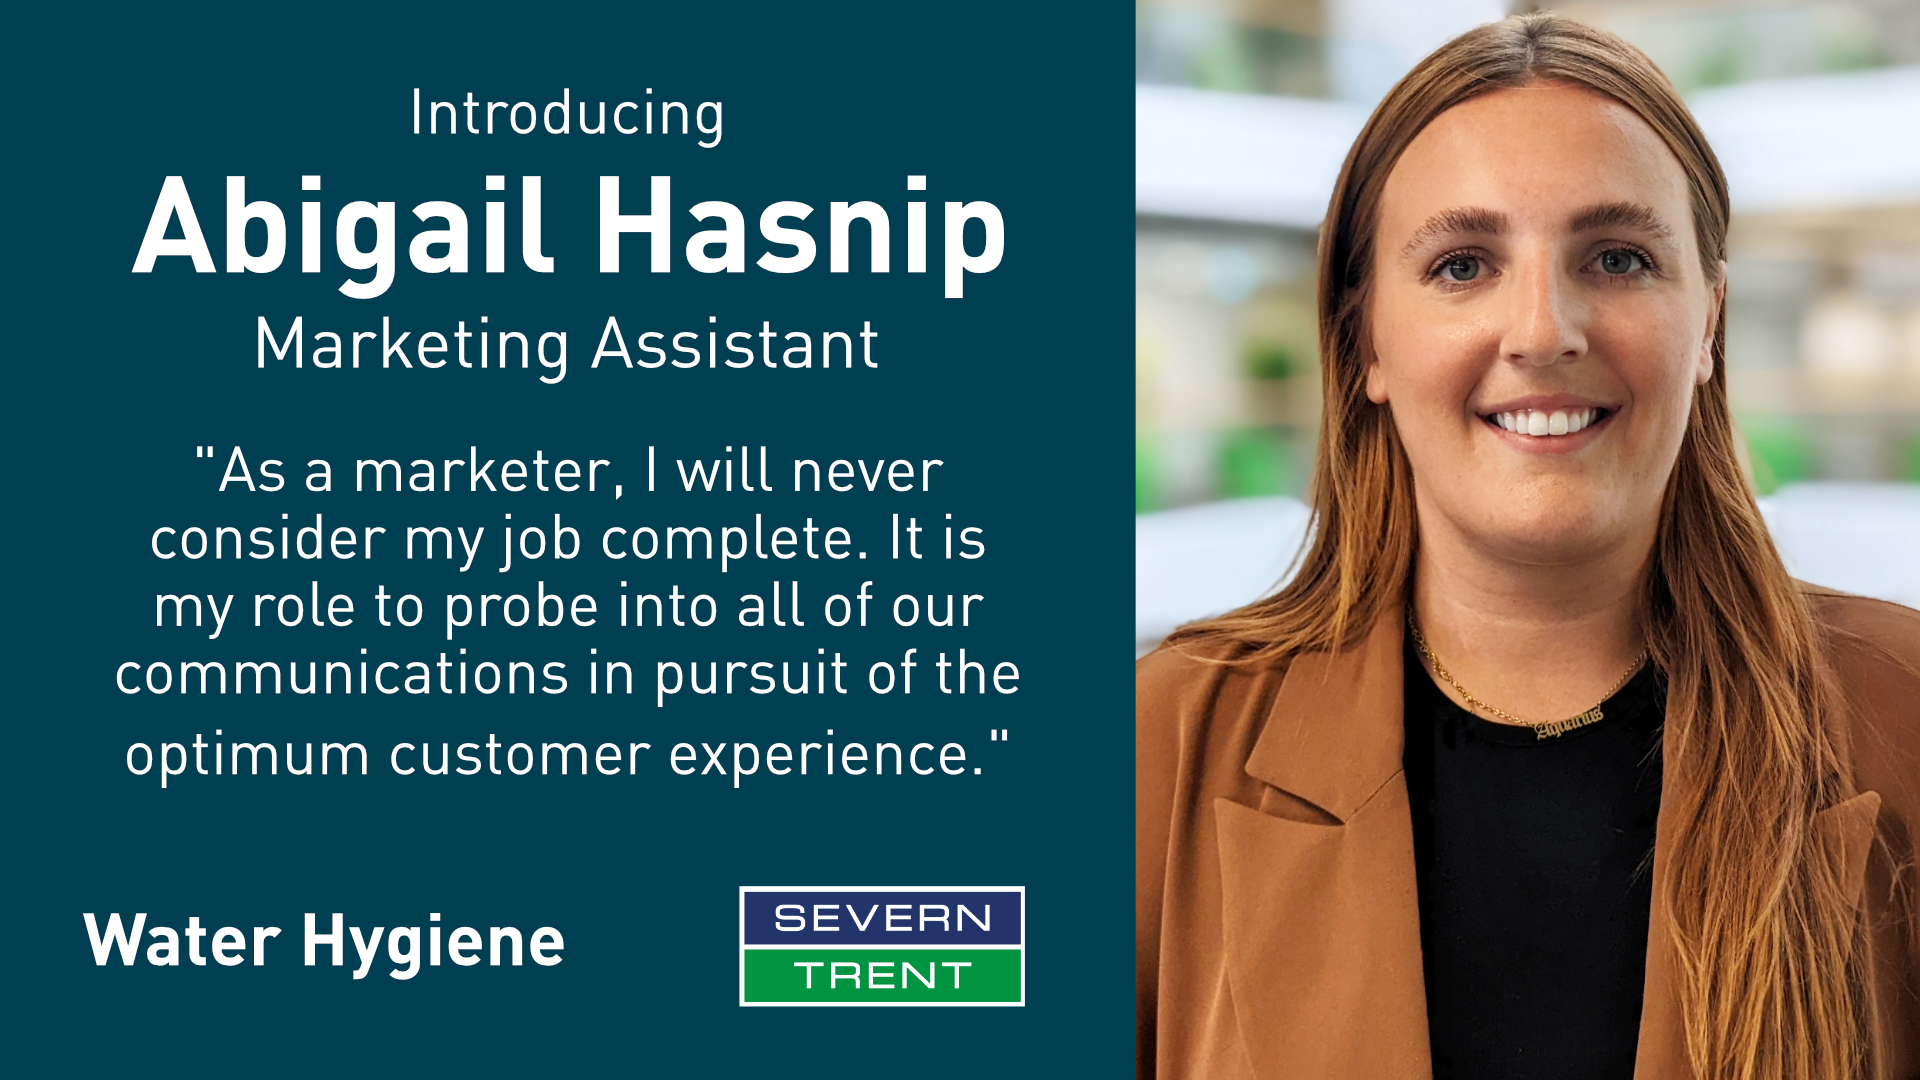 Meet Abigail Hasnip, our new Marketing Assistant